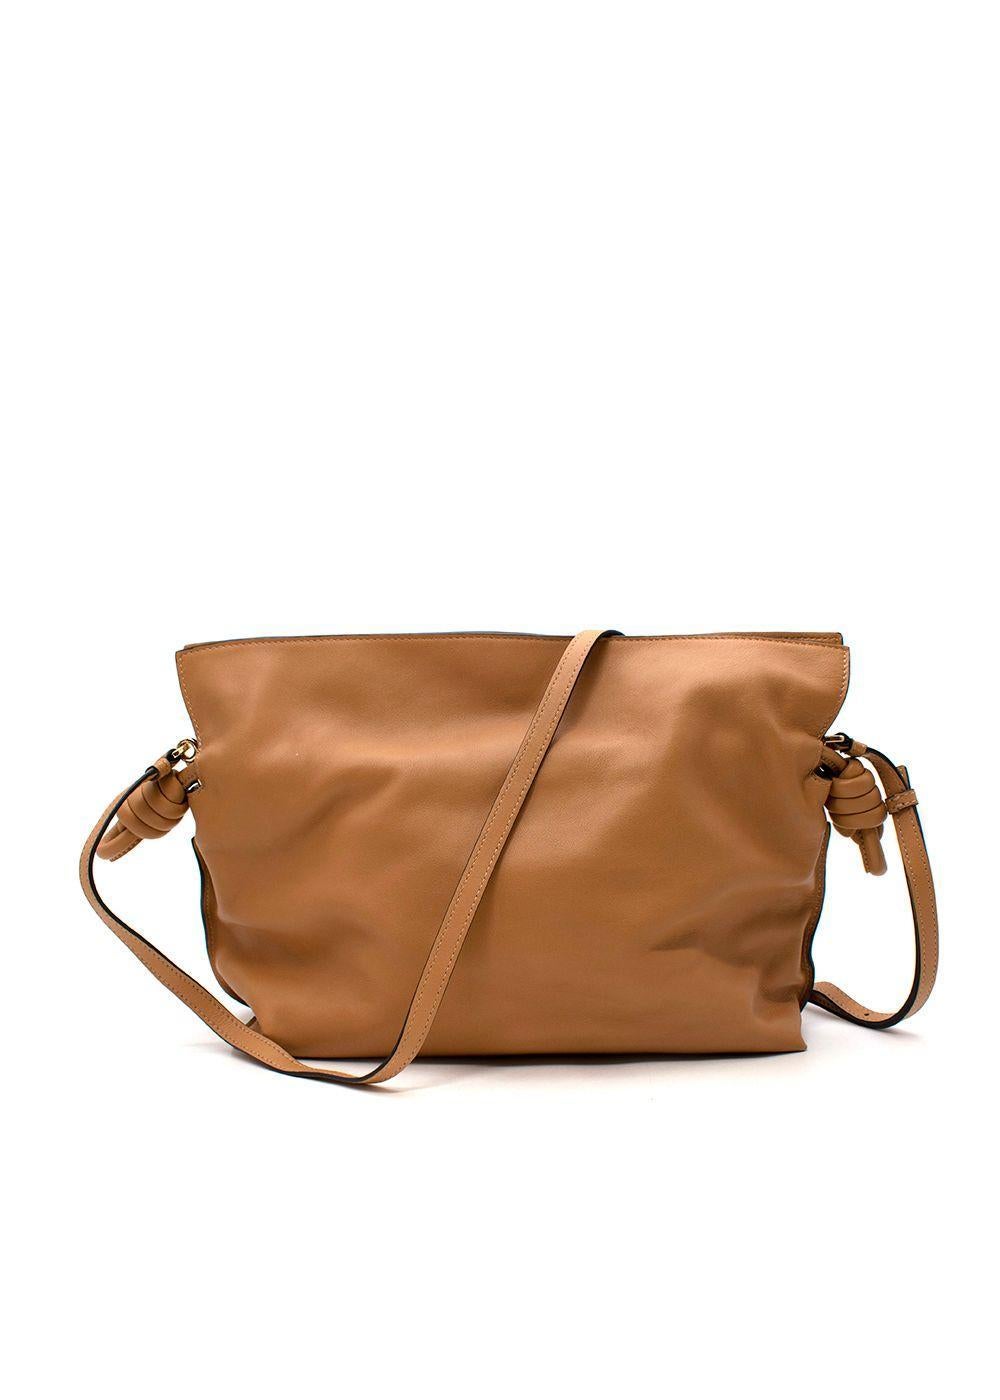 tan brown leather bag